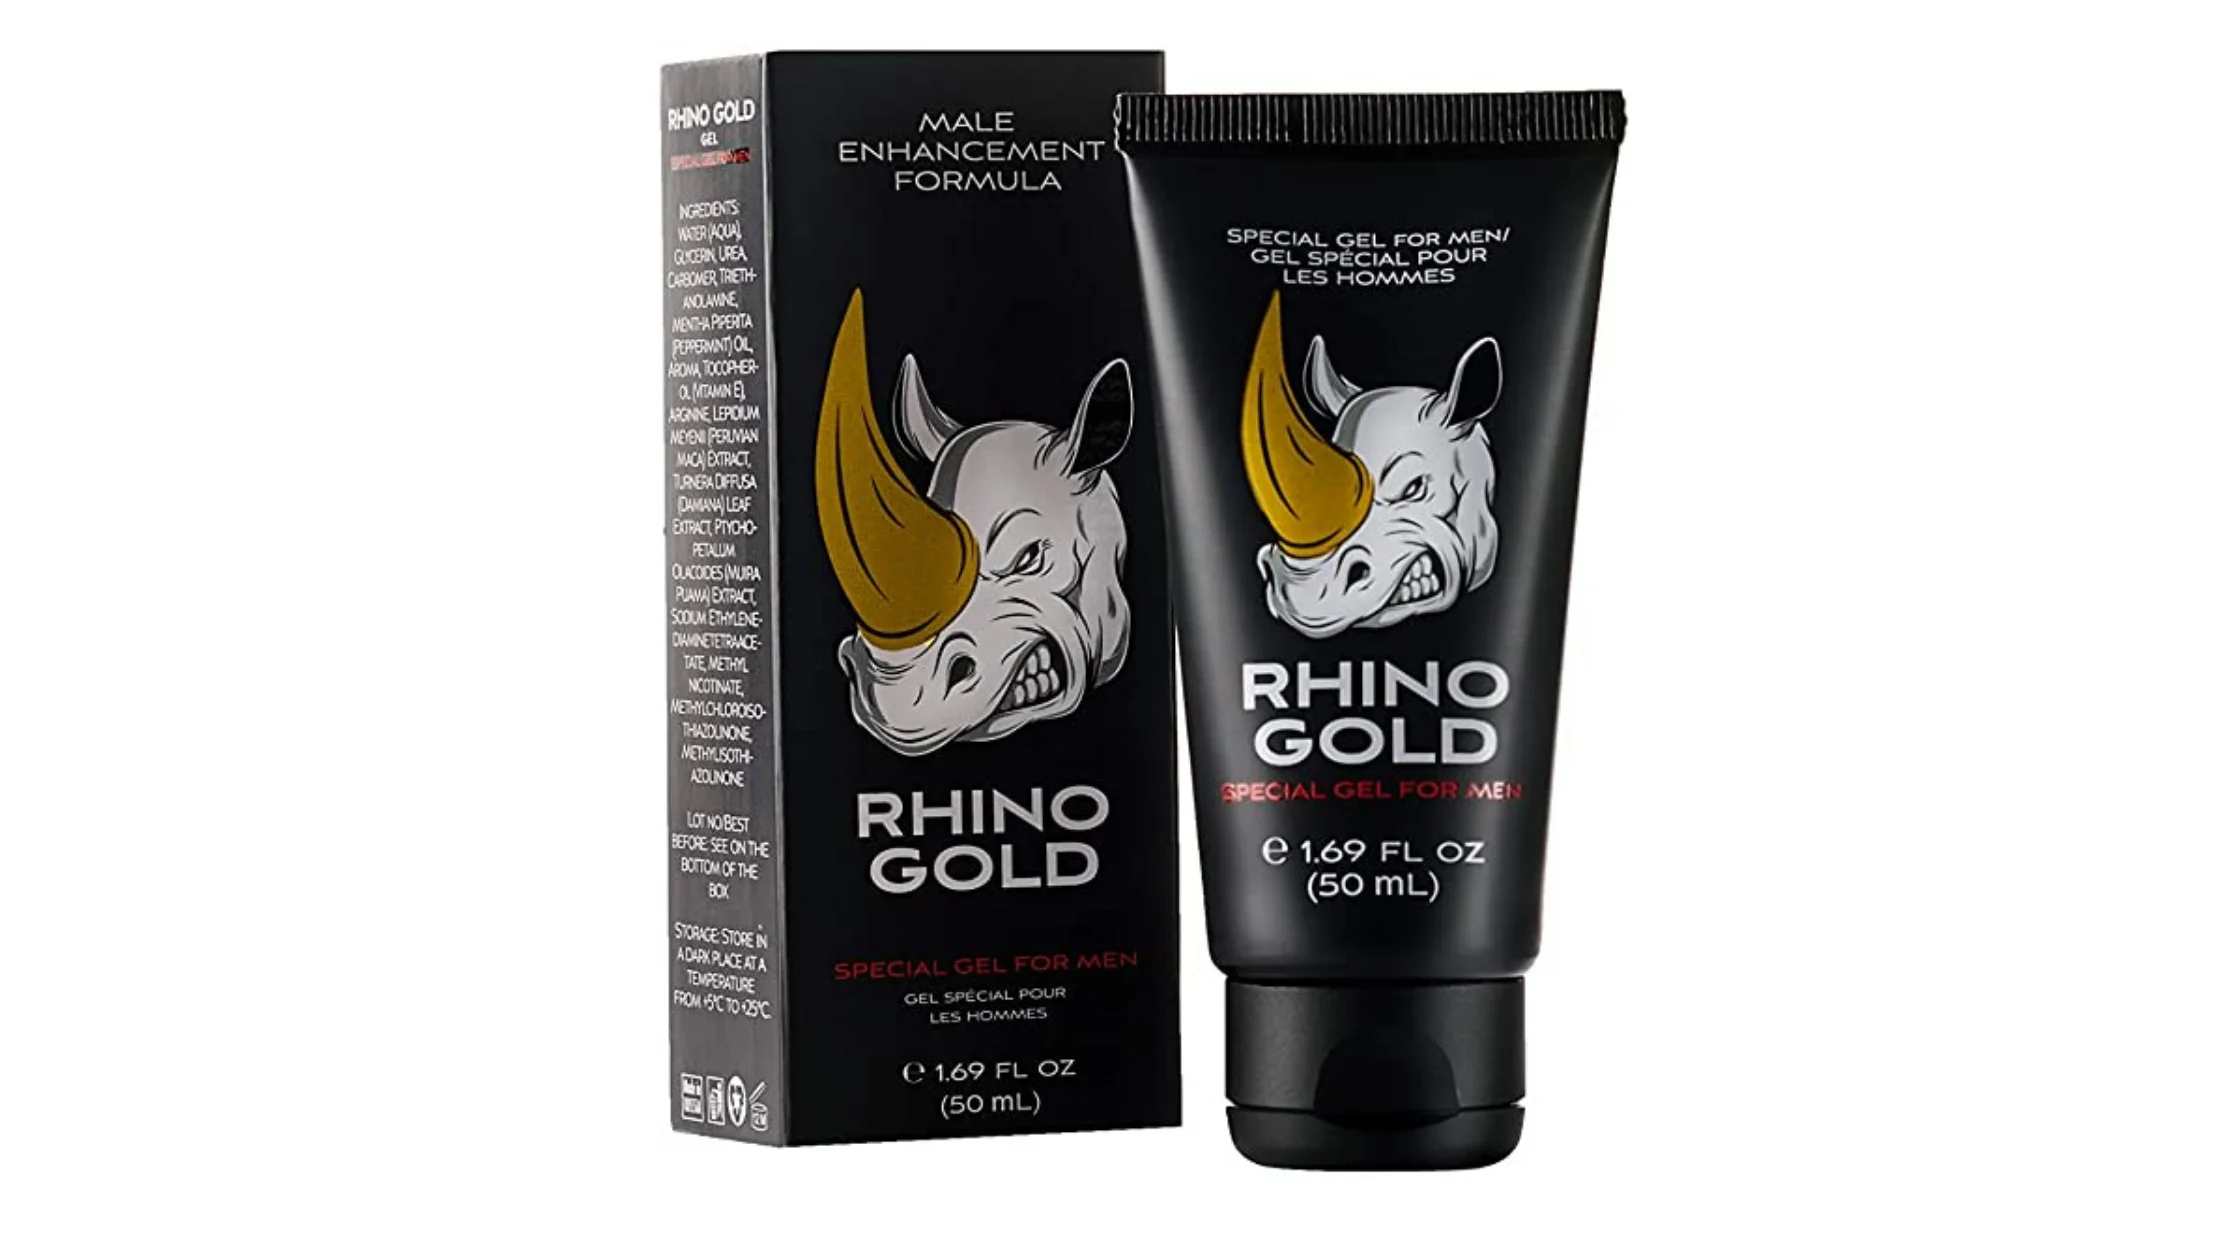 rhino gold gel amazon